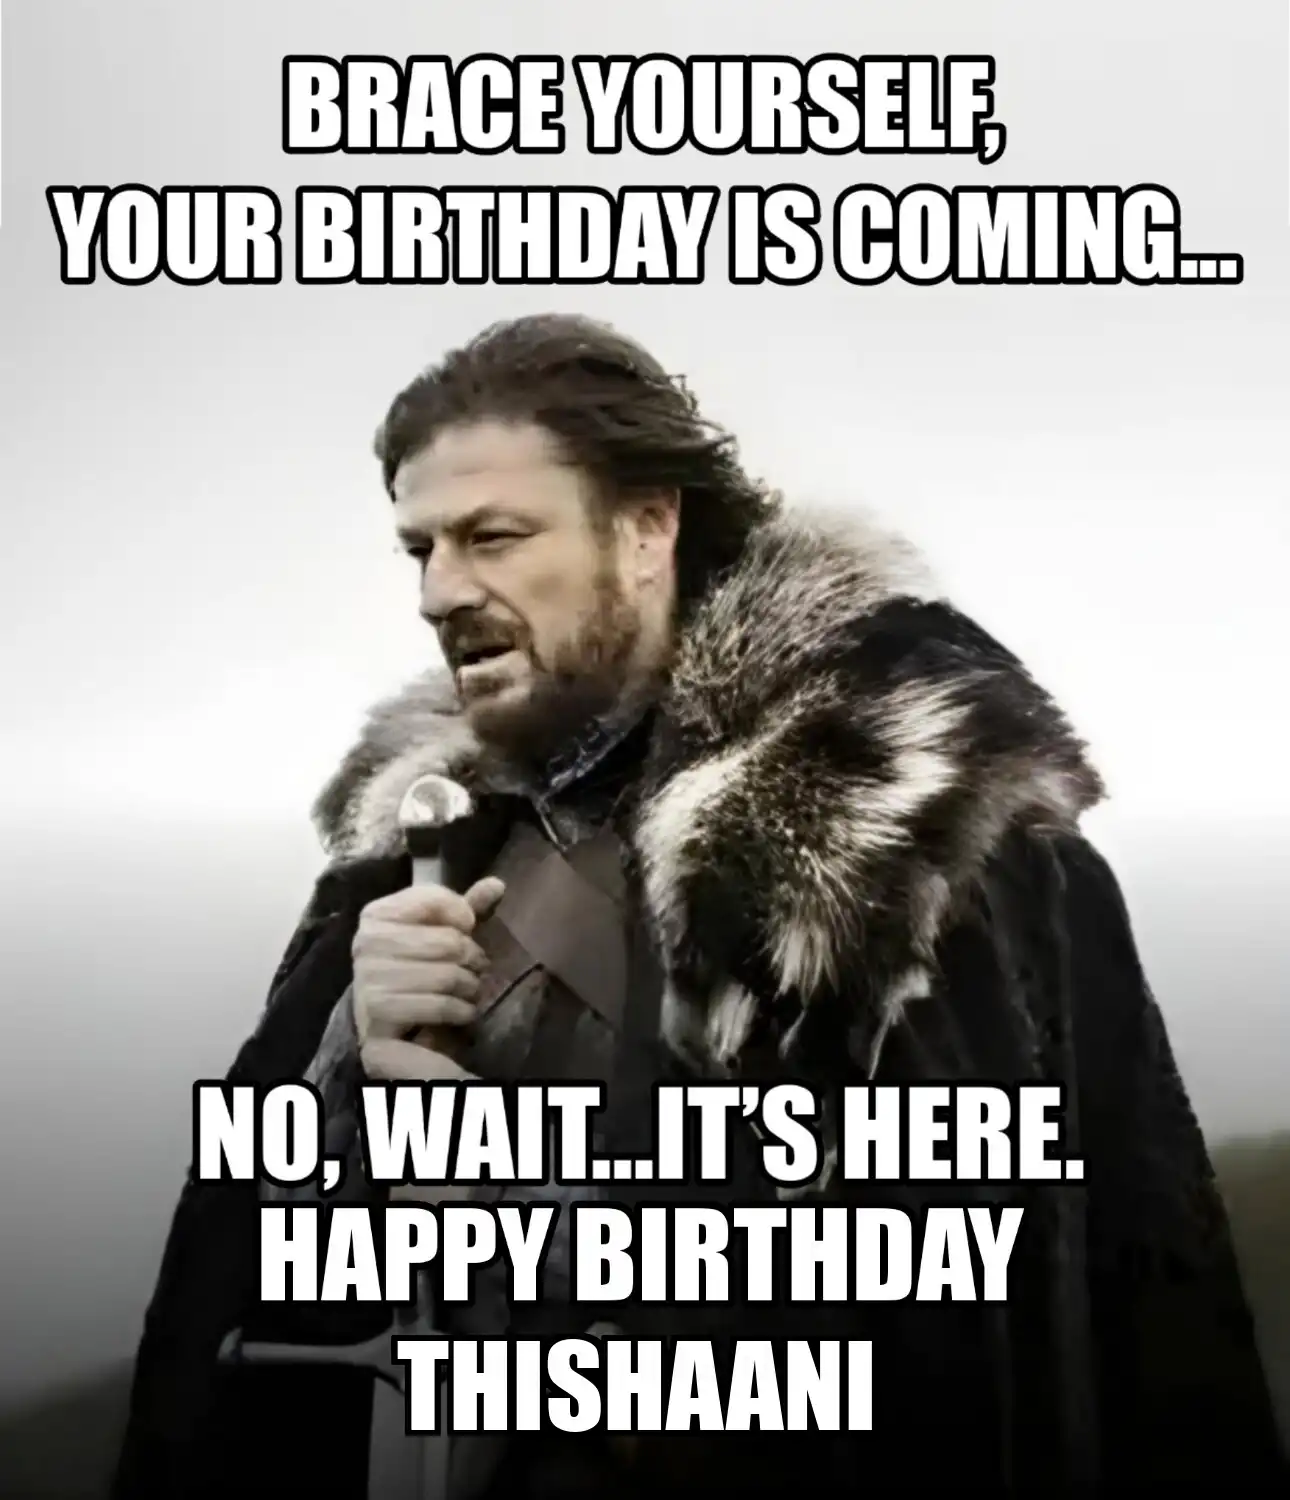 Happy Birthday Thishaani Brace Yourself Your Birthday Is Coming Meme